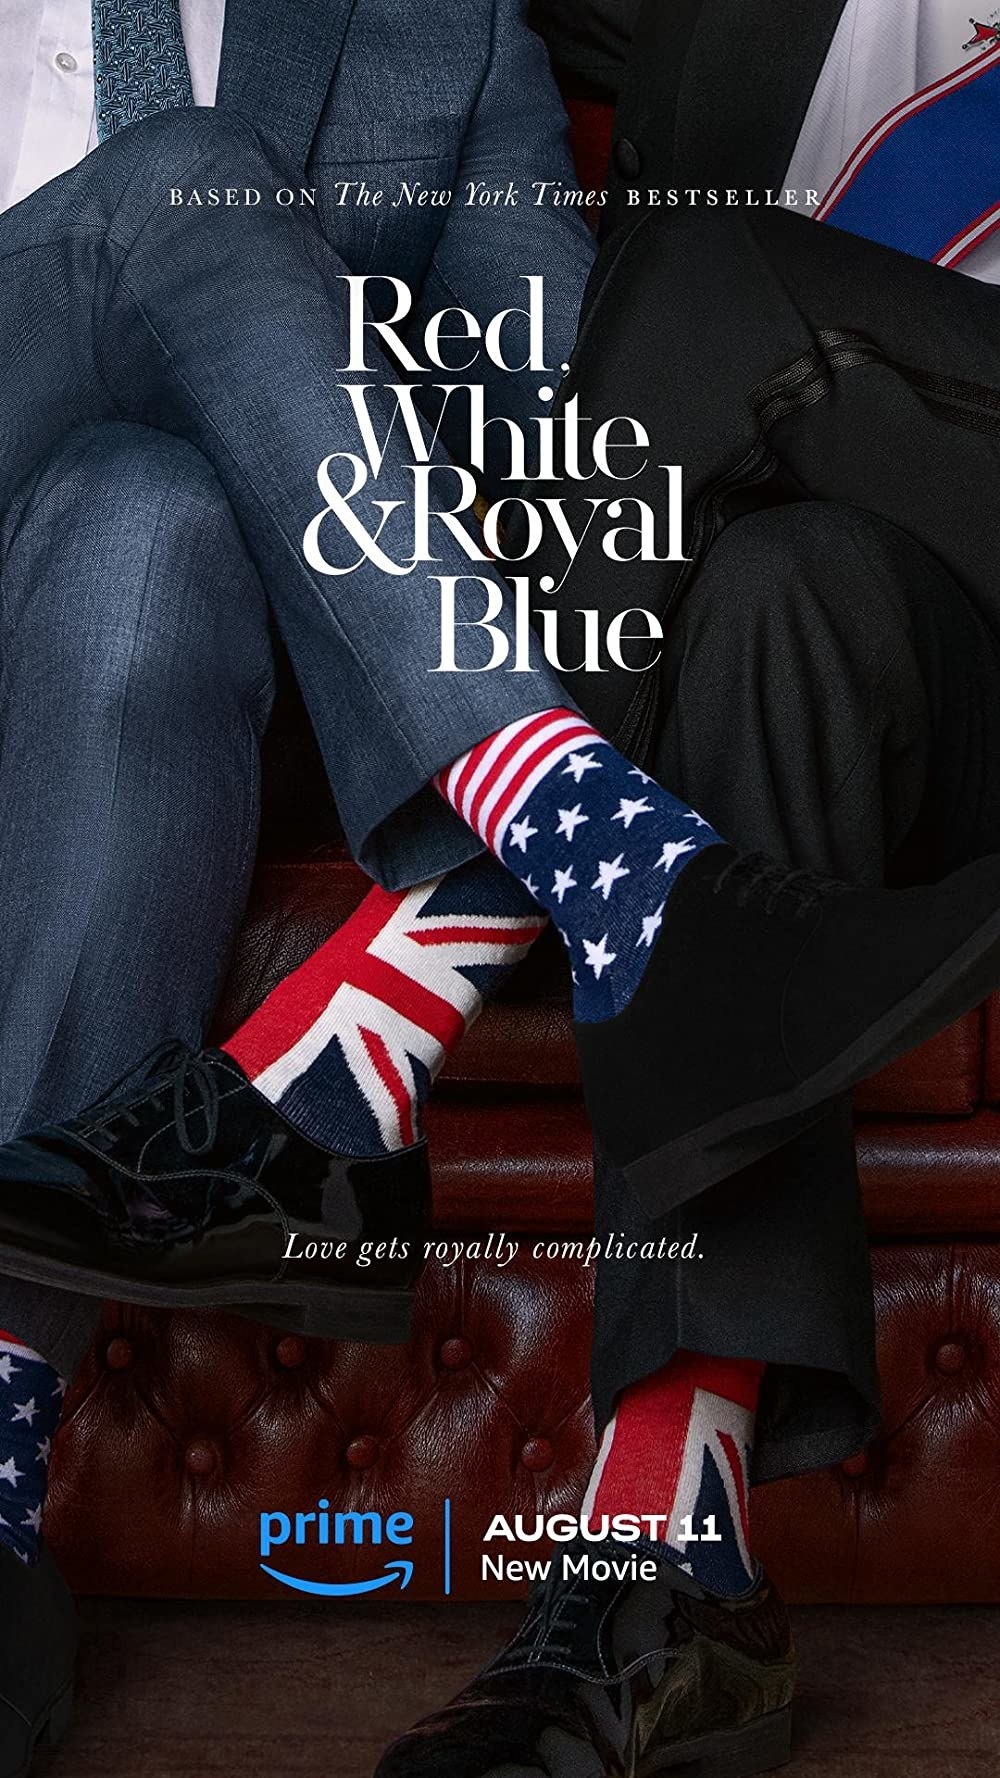 A man wearing American flag socks sits beside a man wearing socks with the British flag